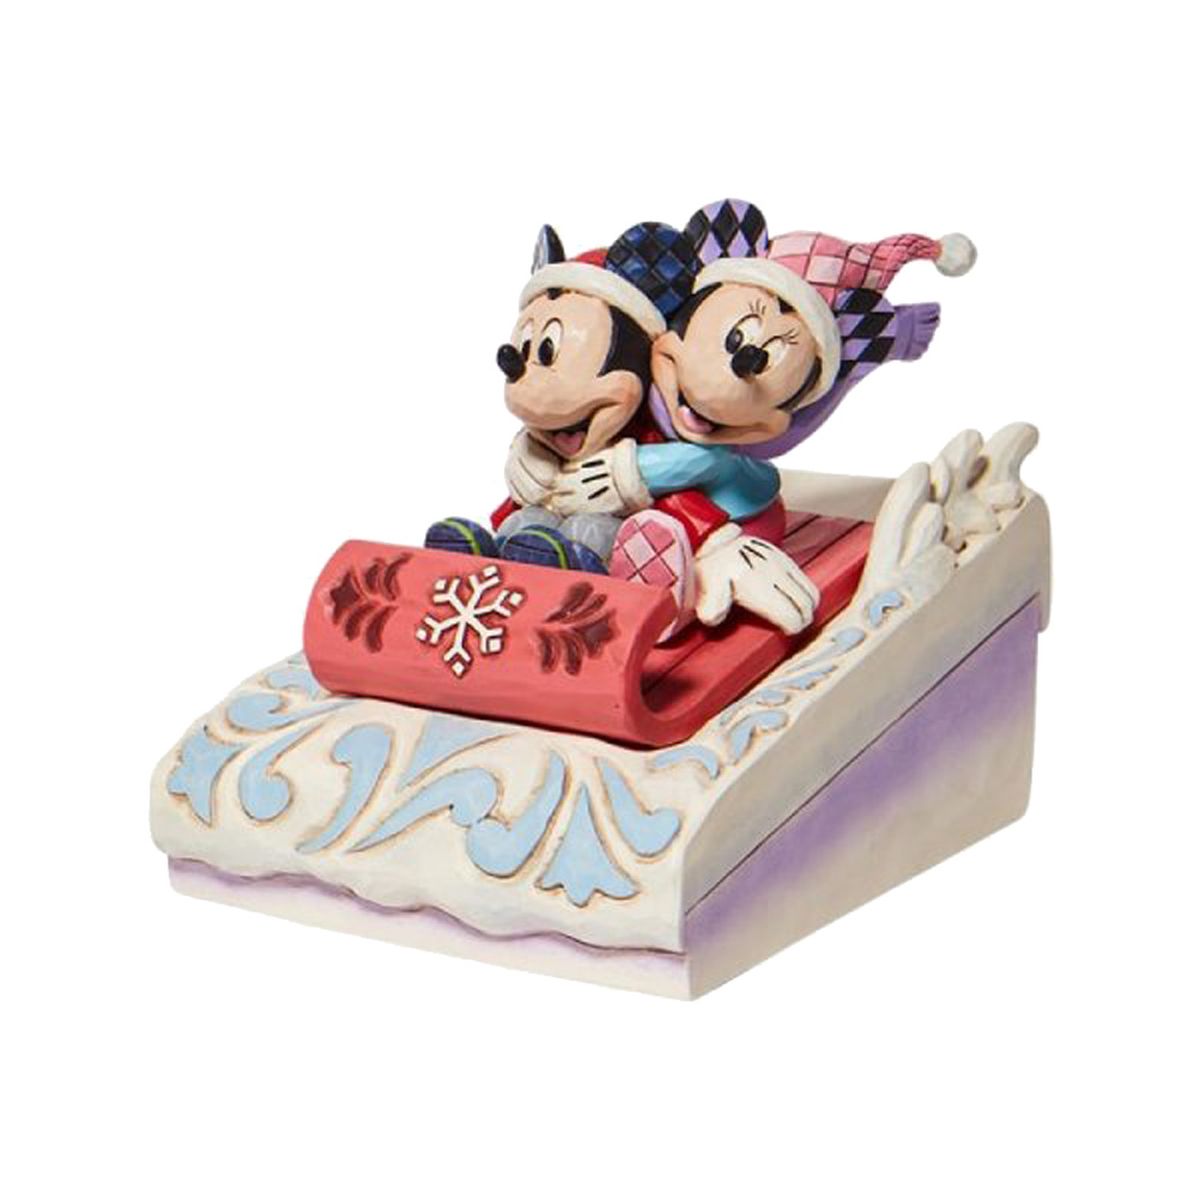 Petite statuette de Collection Mickey et Minnie